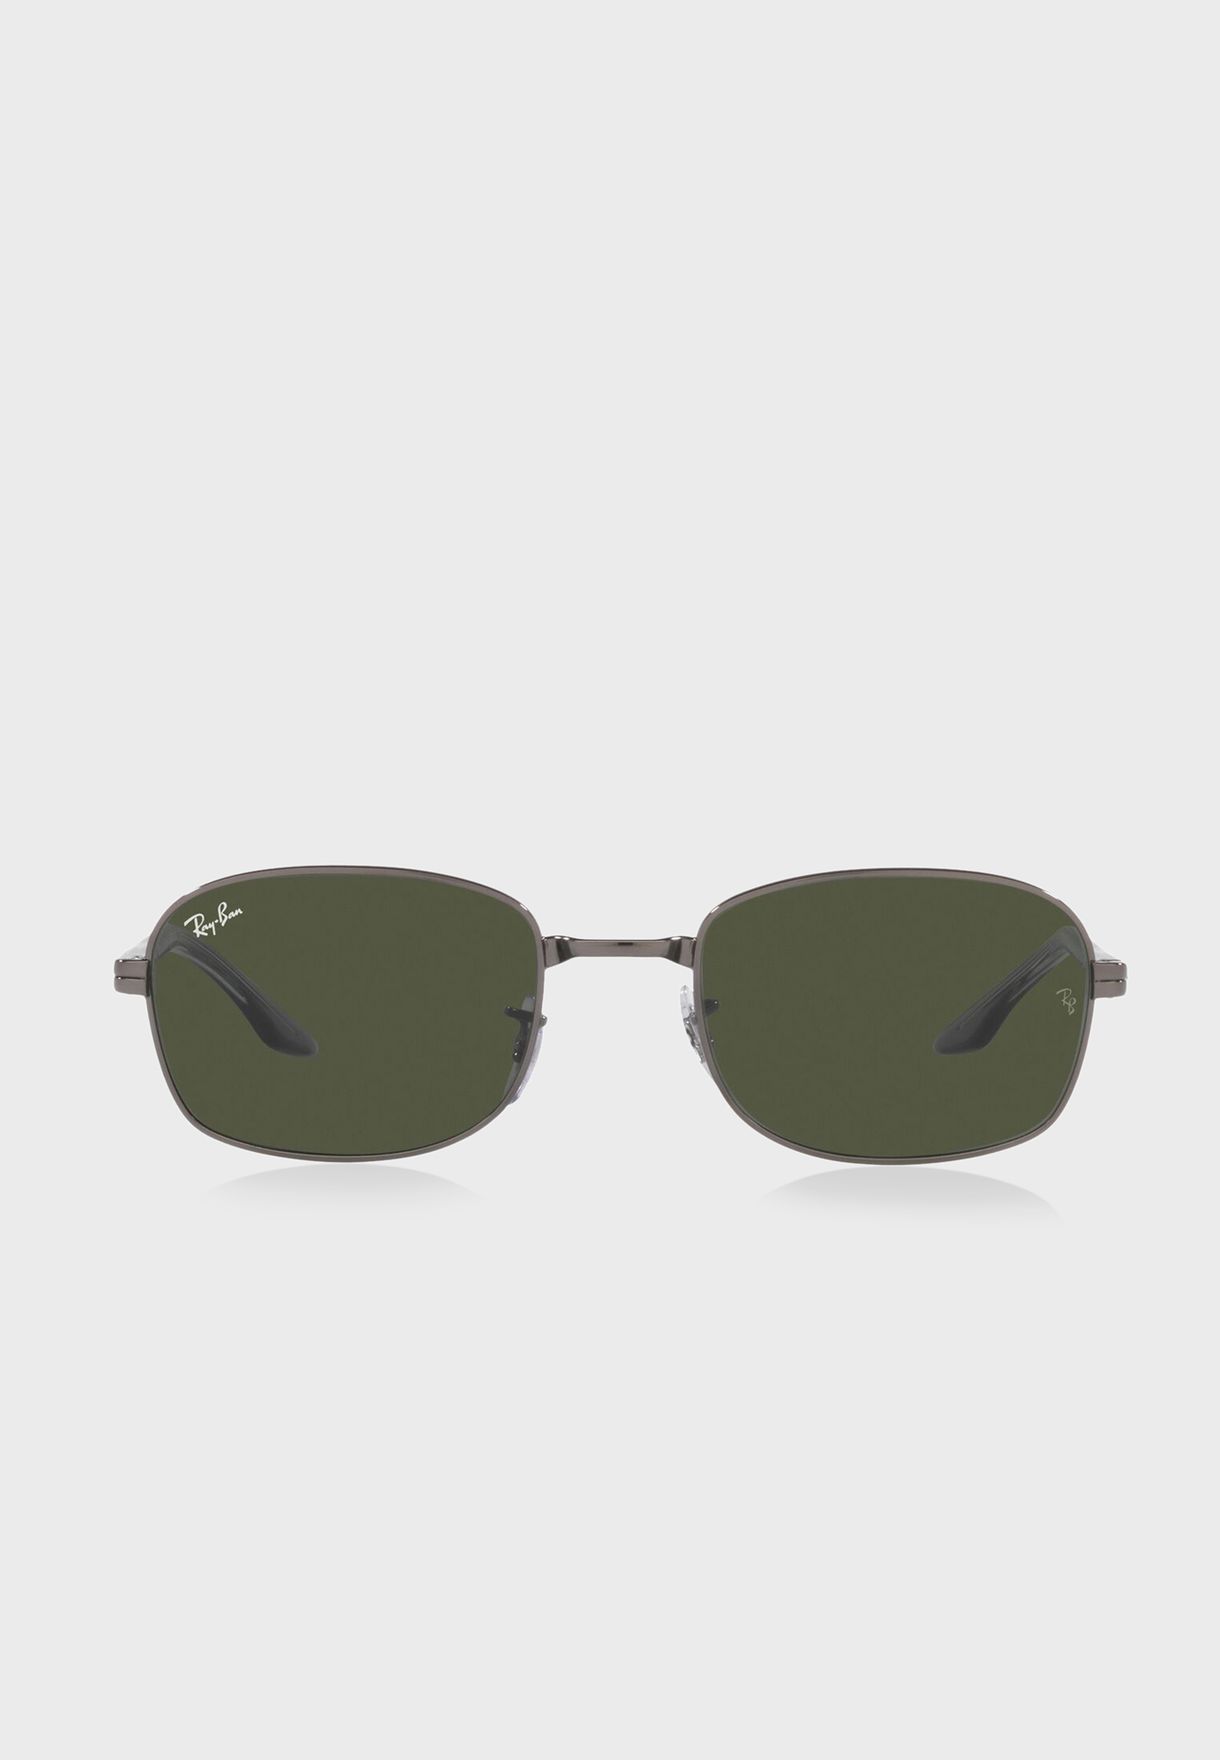 0Rb3690 Wayfarers Sunglasses